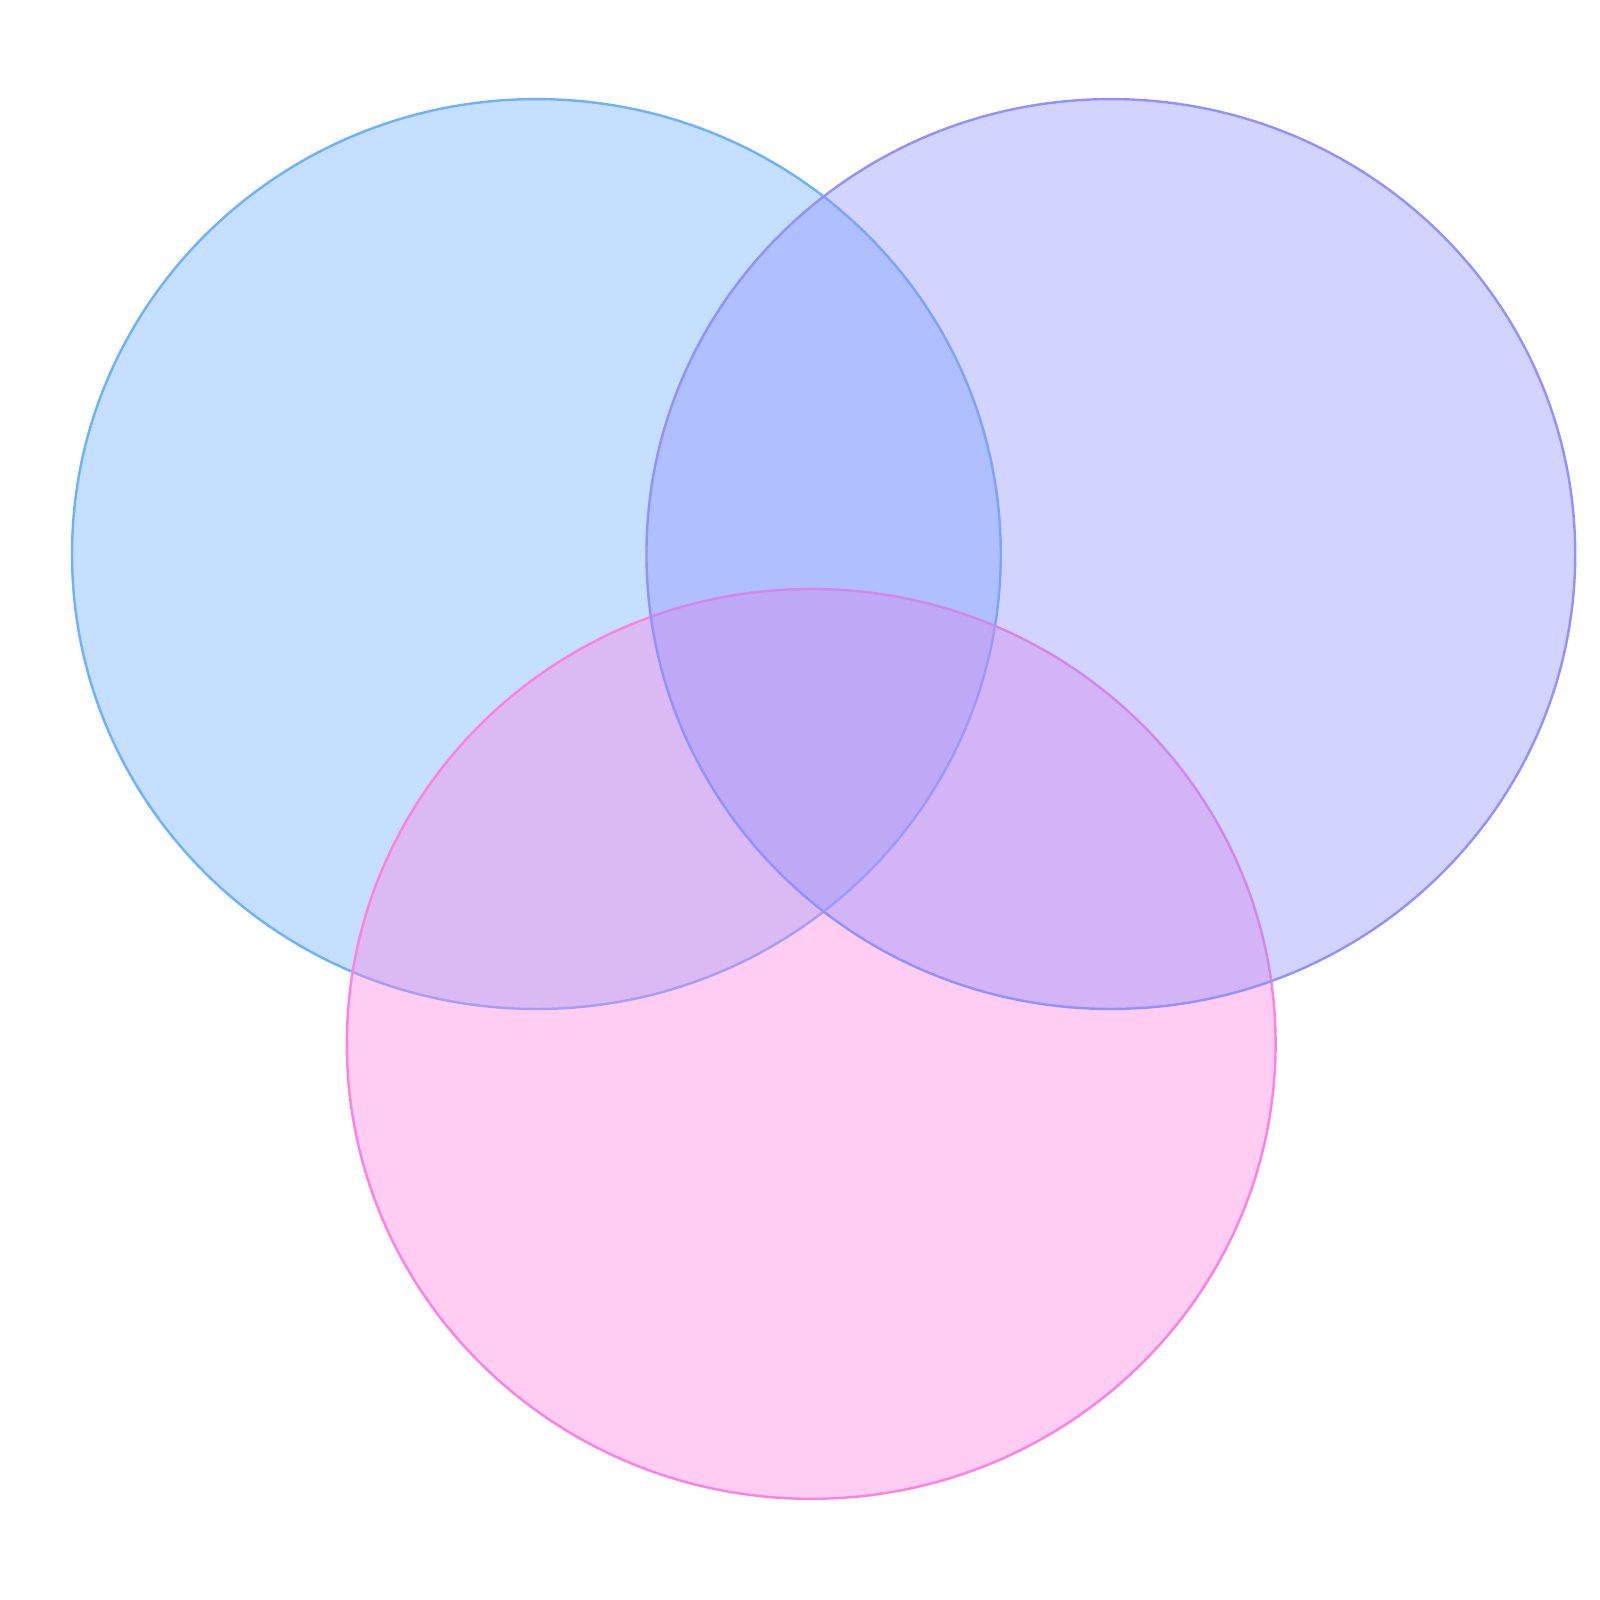 Three-set Venn diagram example